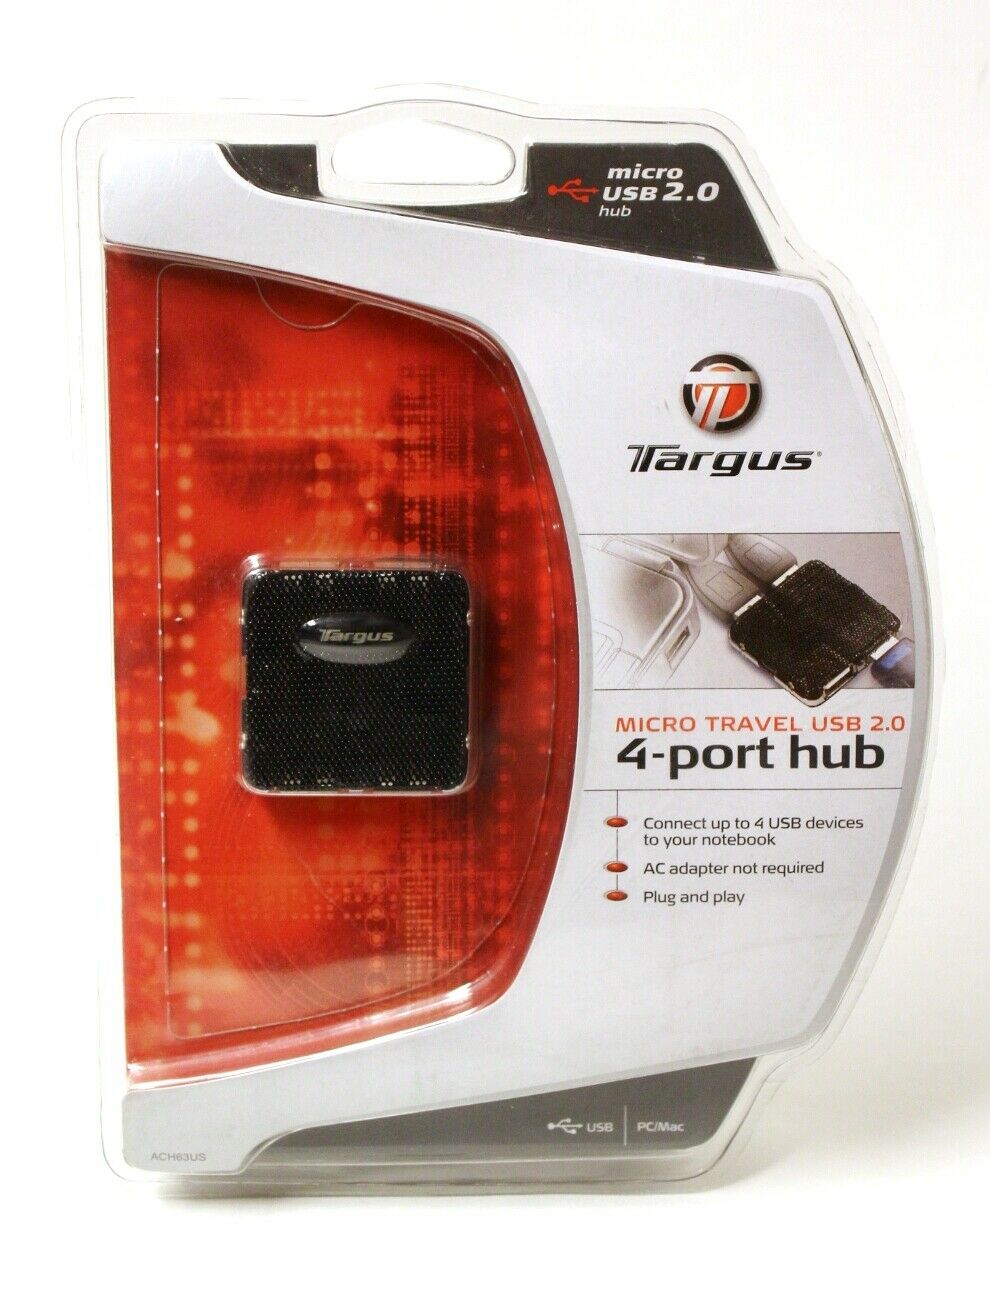 Targus Ach63us Micro Travel Usb 2.0 4-port Hub